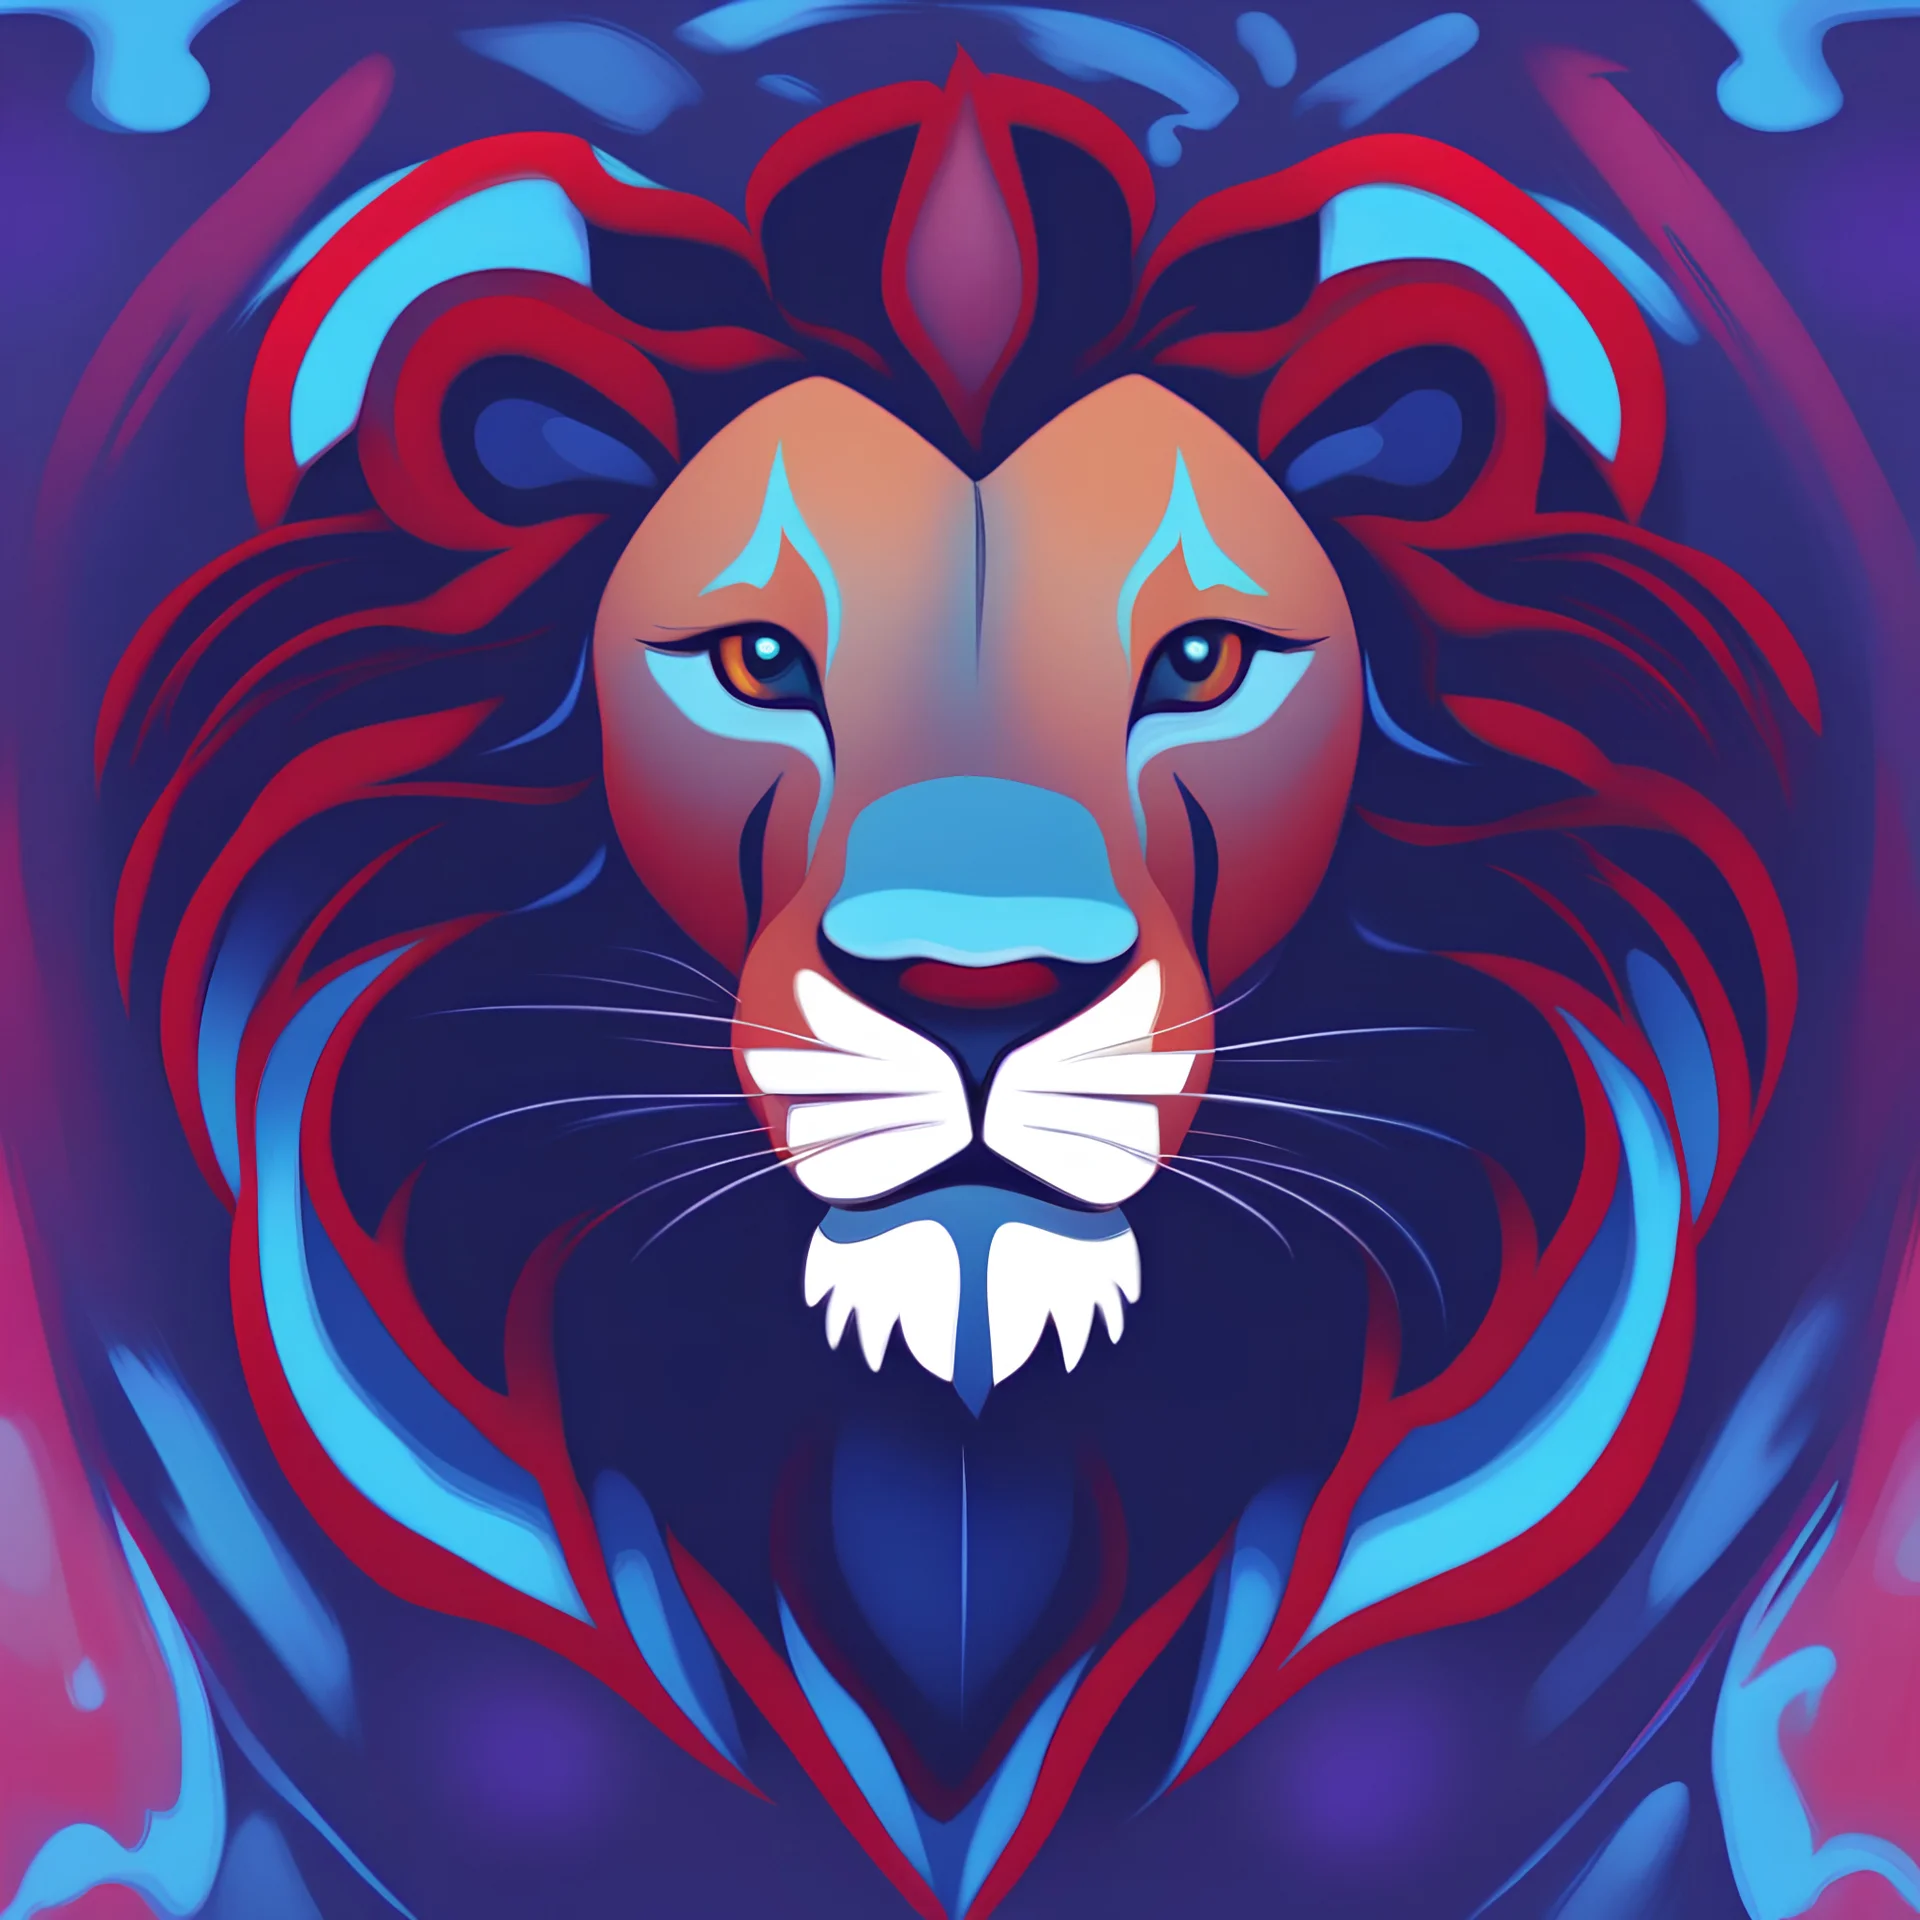 Professional Digital Painting, Lion Symbol, Energy Boost, Blue, Red & Violet